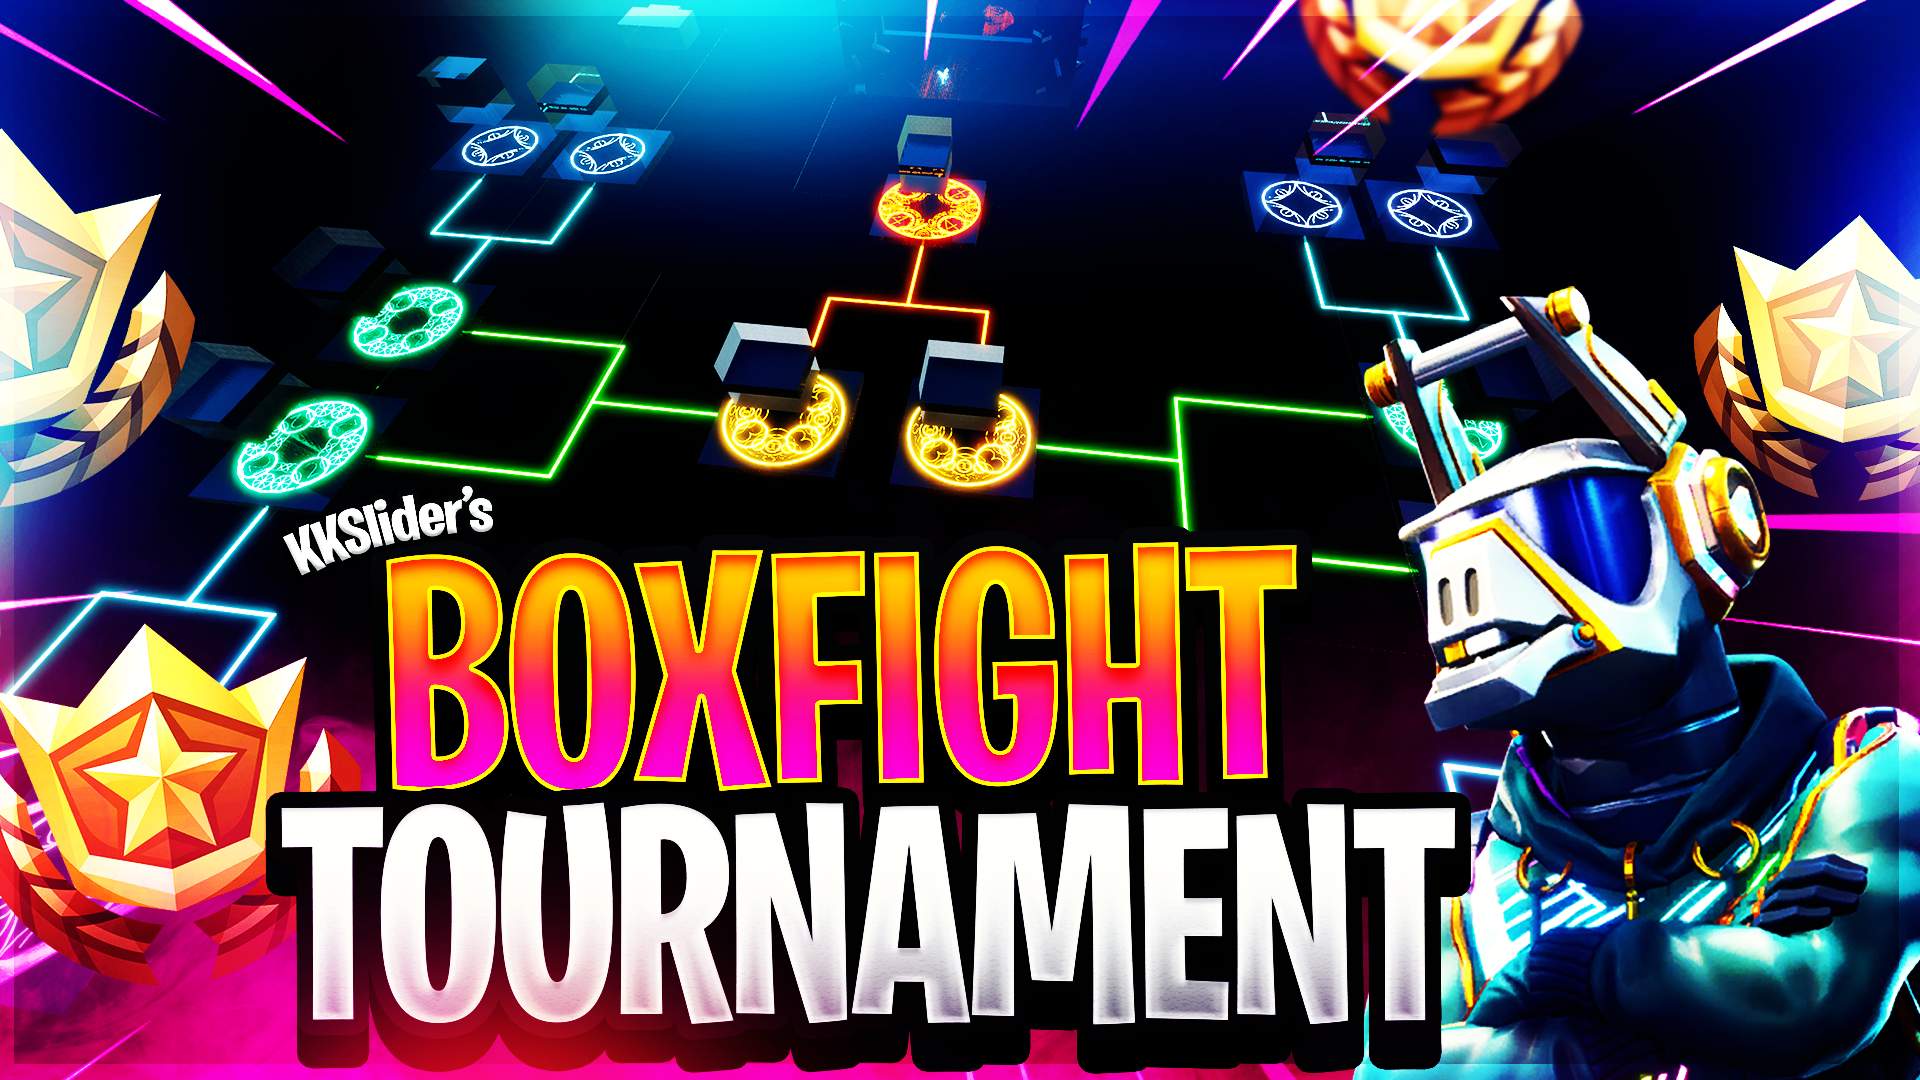 Tournament Duos Fortnite Code Kkslider S Box Fight Tournament Fortnite Creative Map Code Dropnite